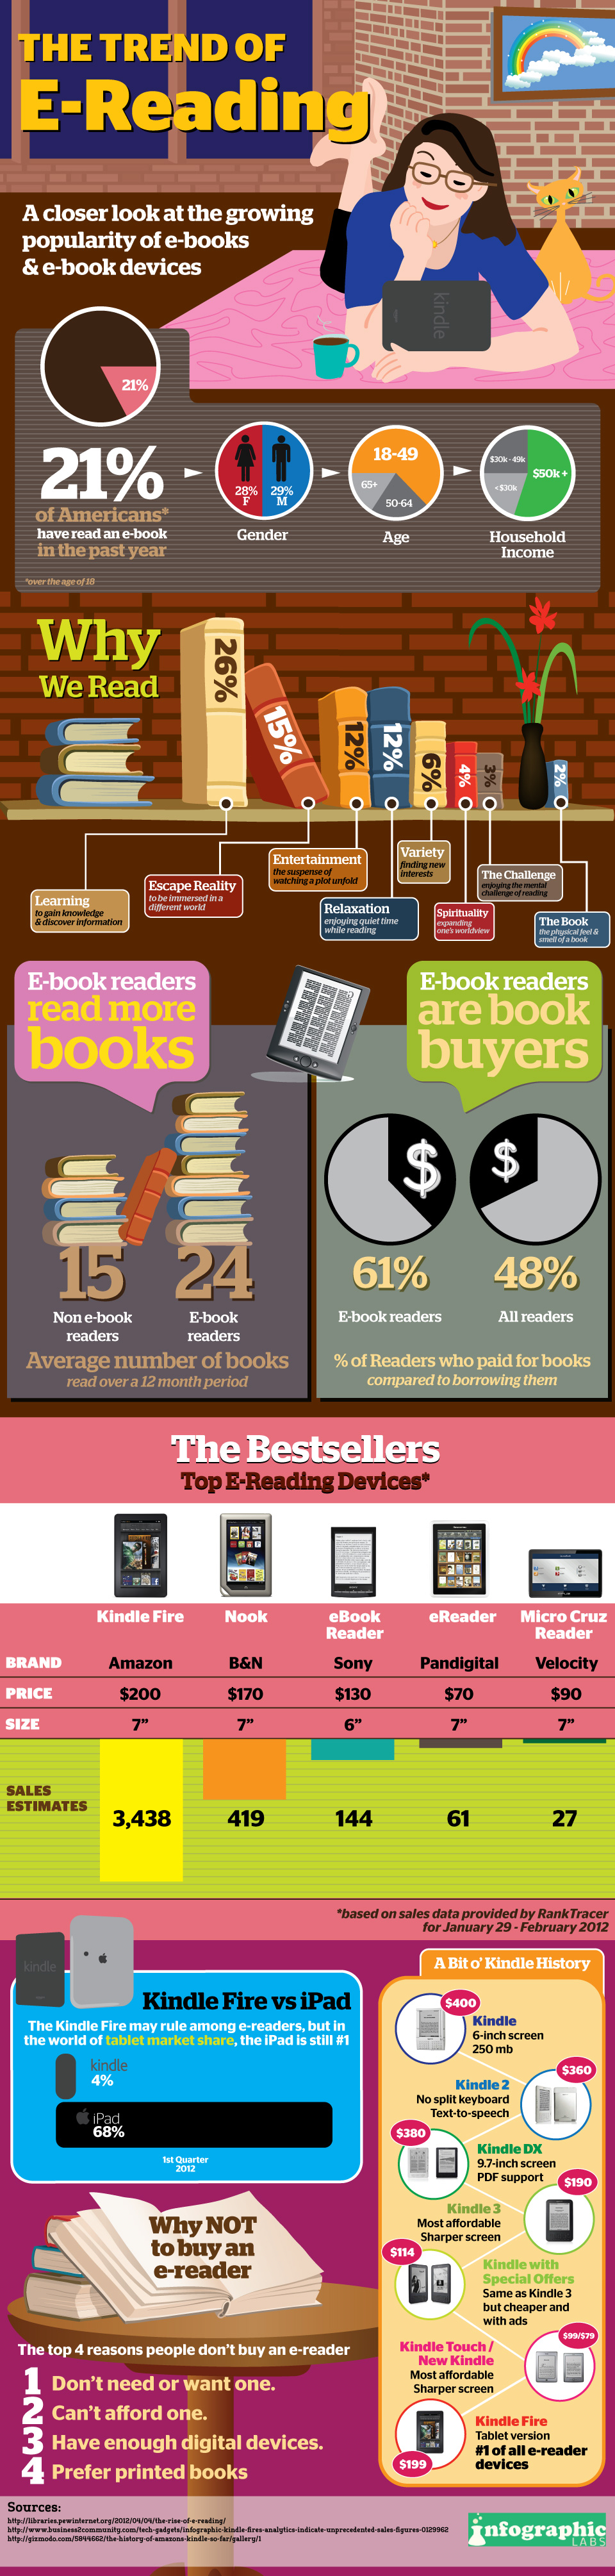 Infographic: The evolution of e Reading   myITforum.com  freelance jobs sharepoint